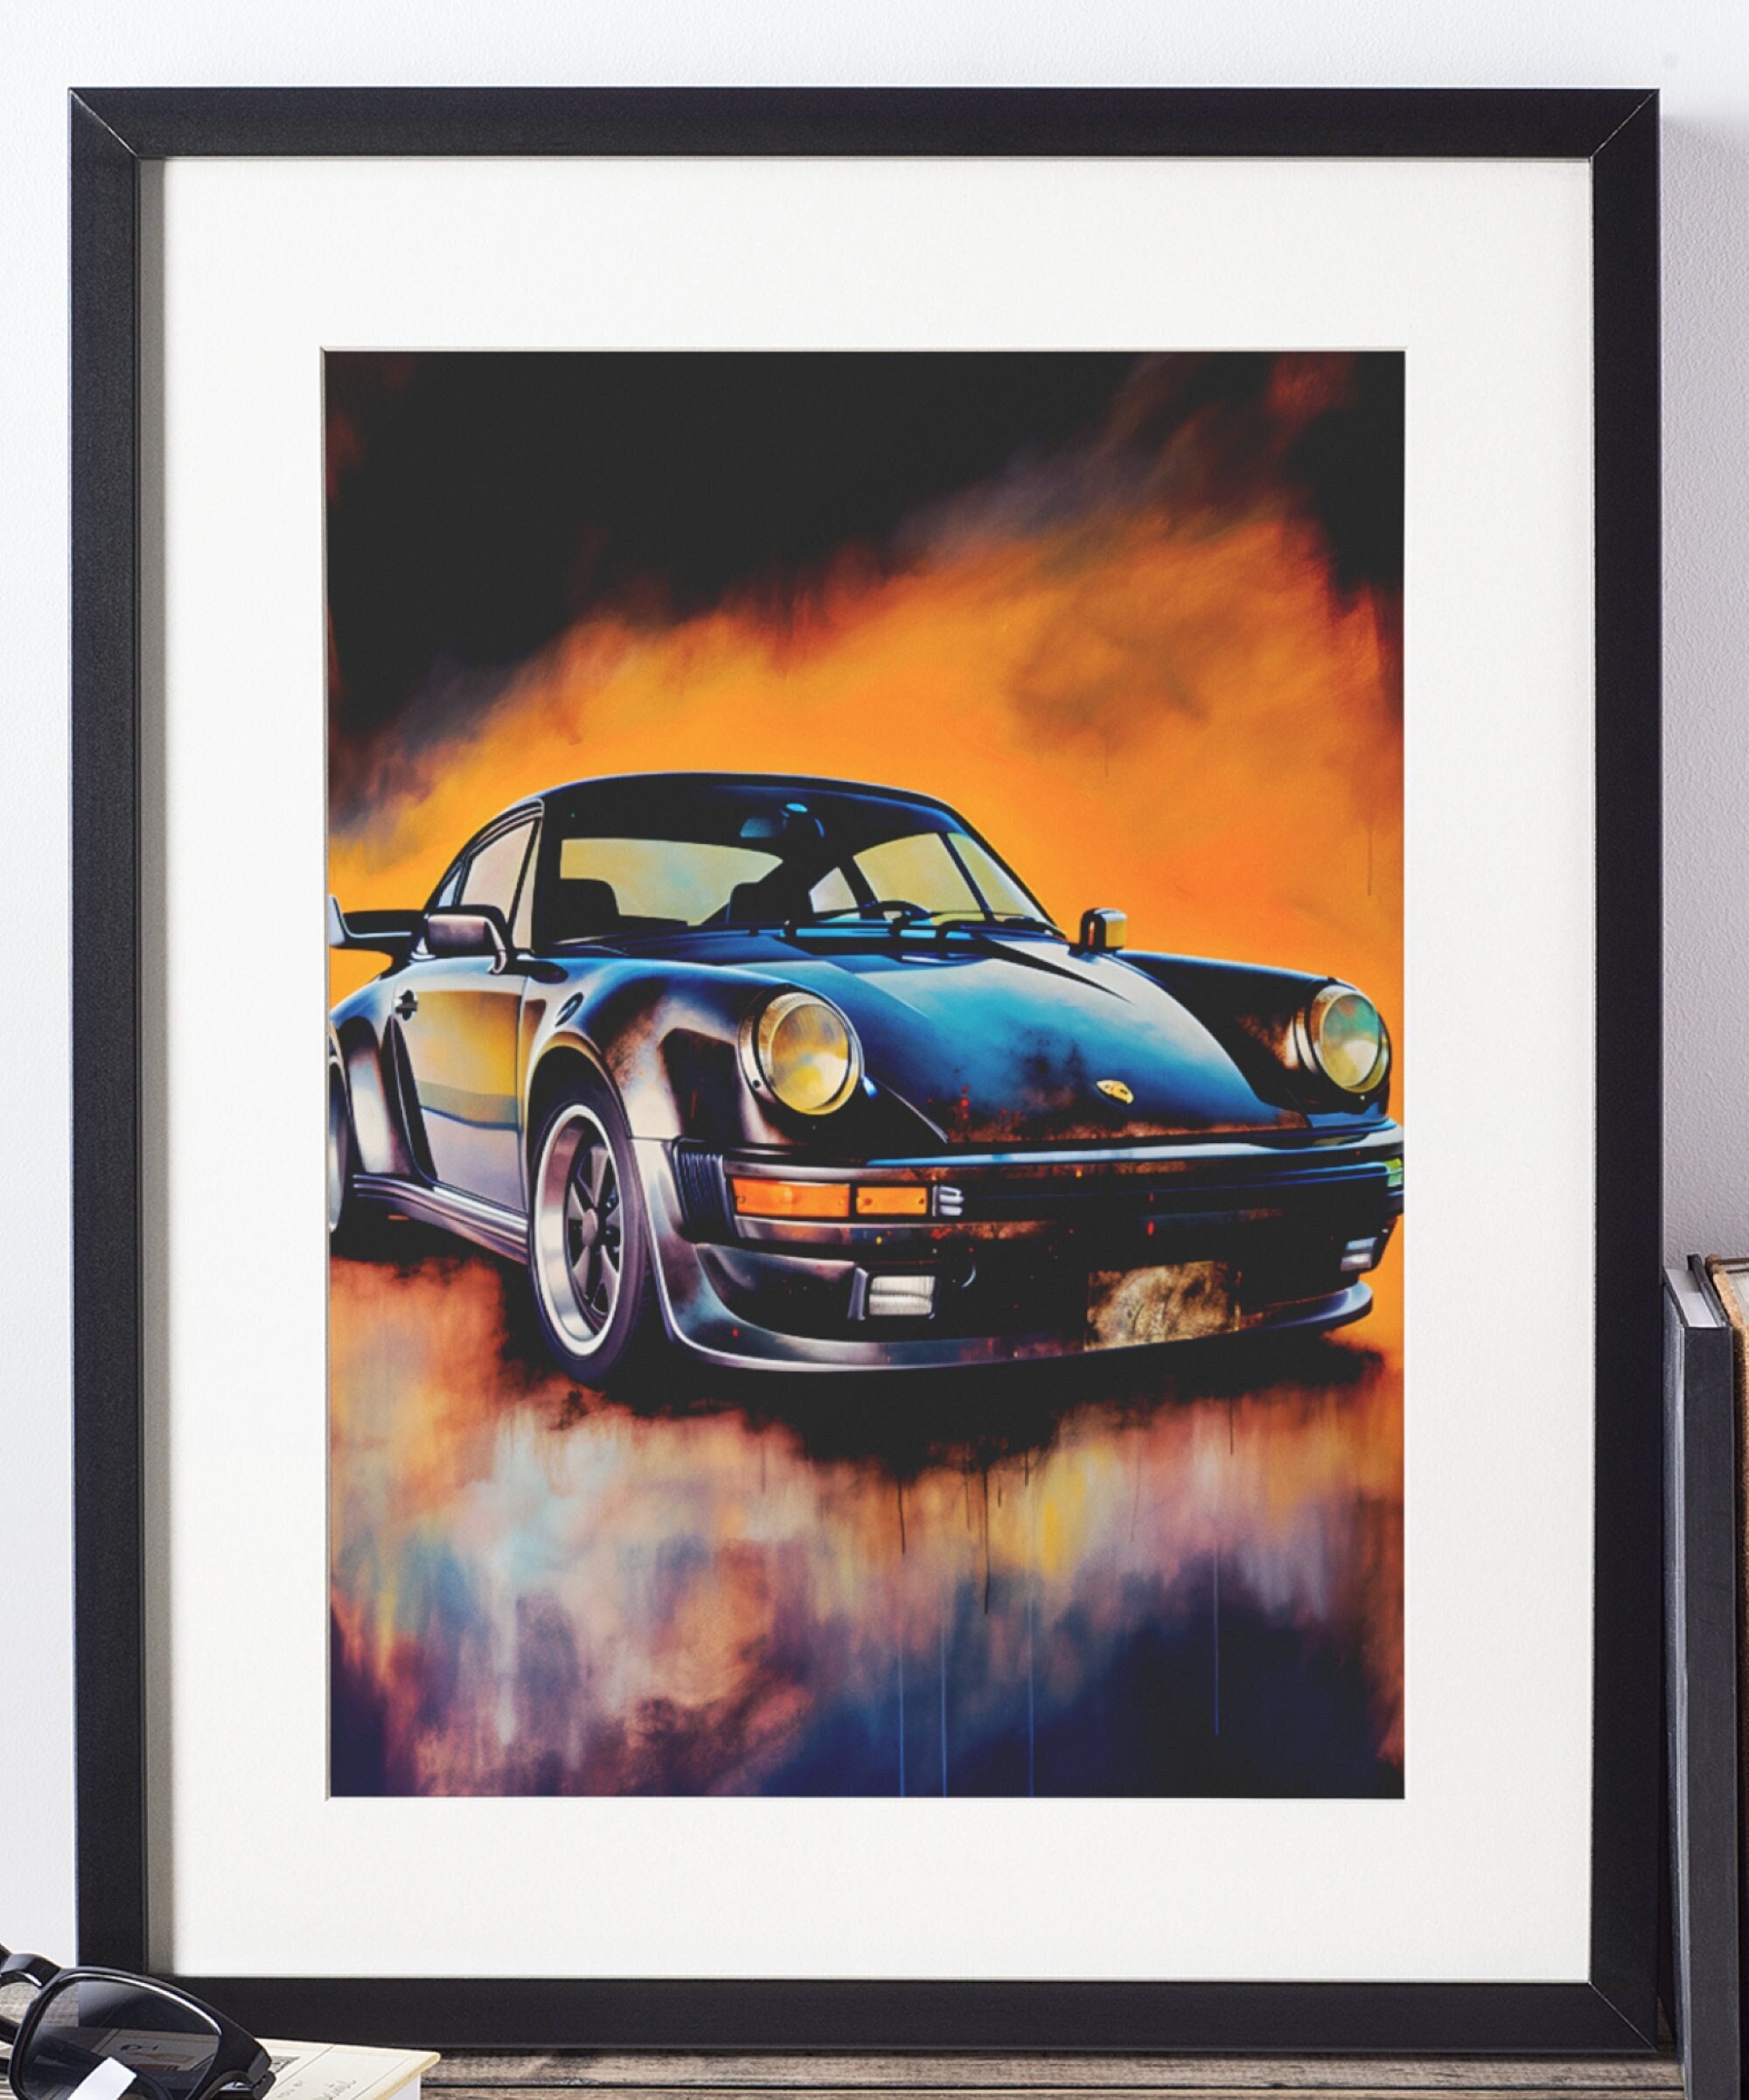 Porsche 911 Art - 930 Turbo Series Paintings